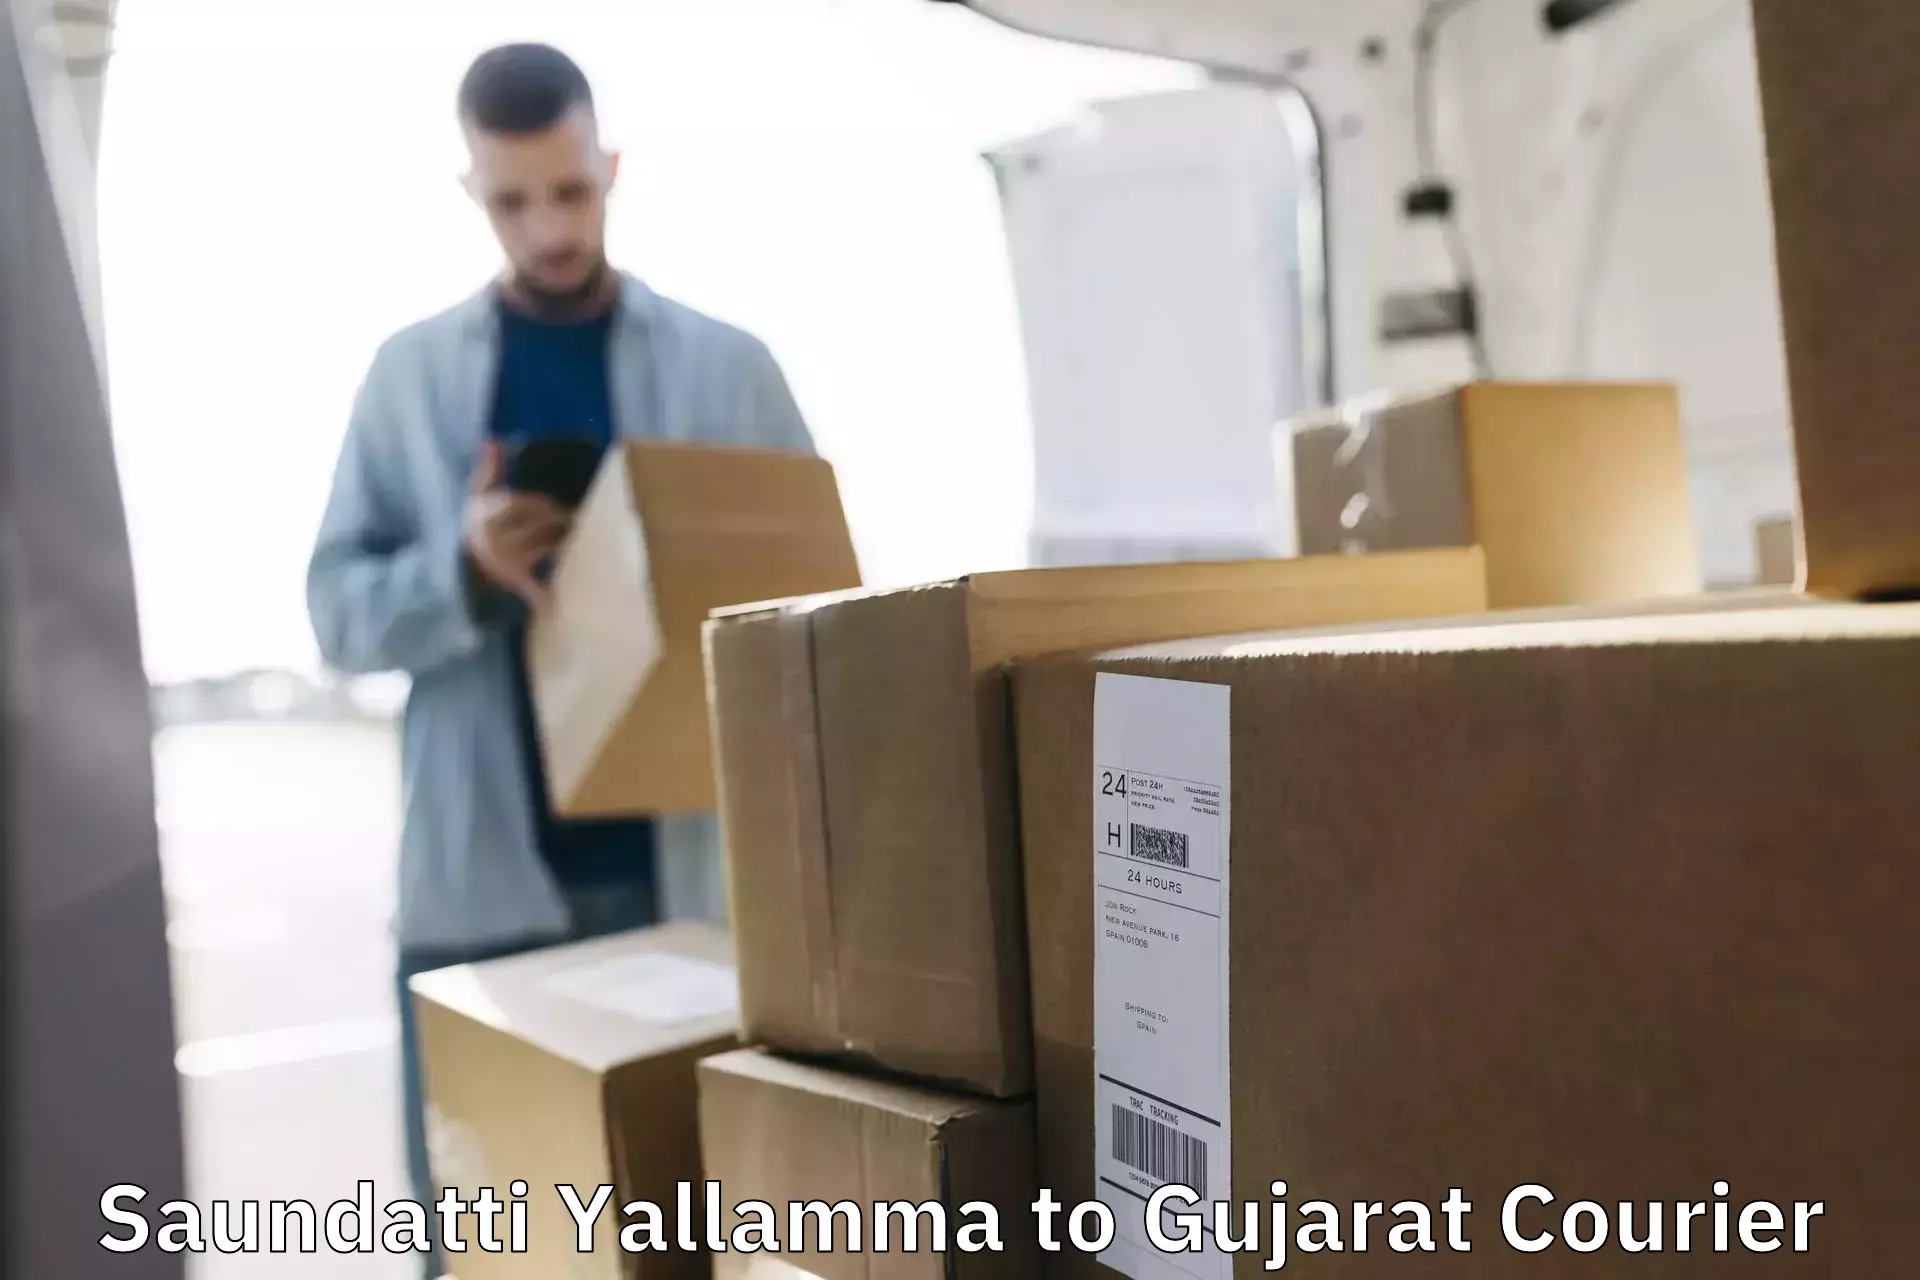 Speedy delivery service Saundatti Yallamma to Umreth